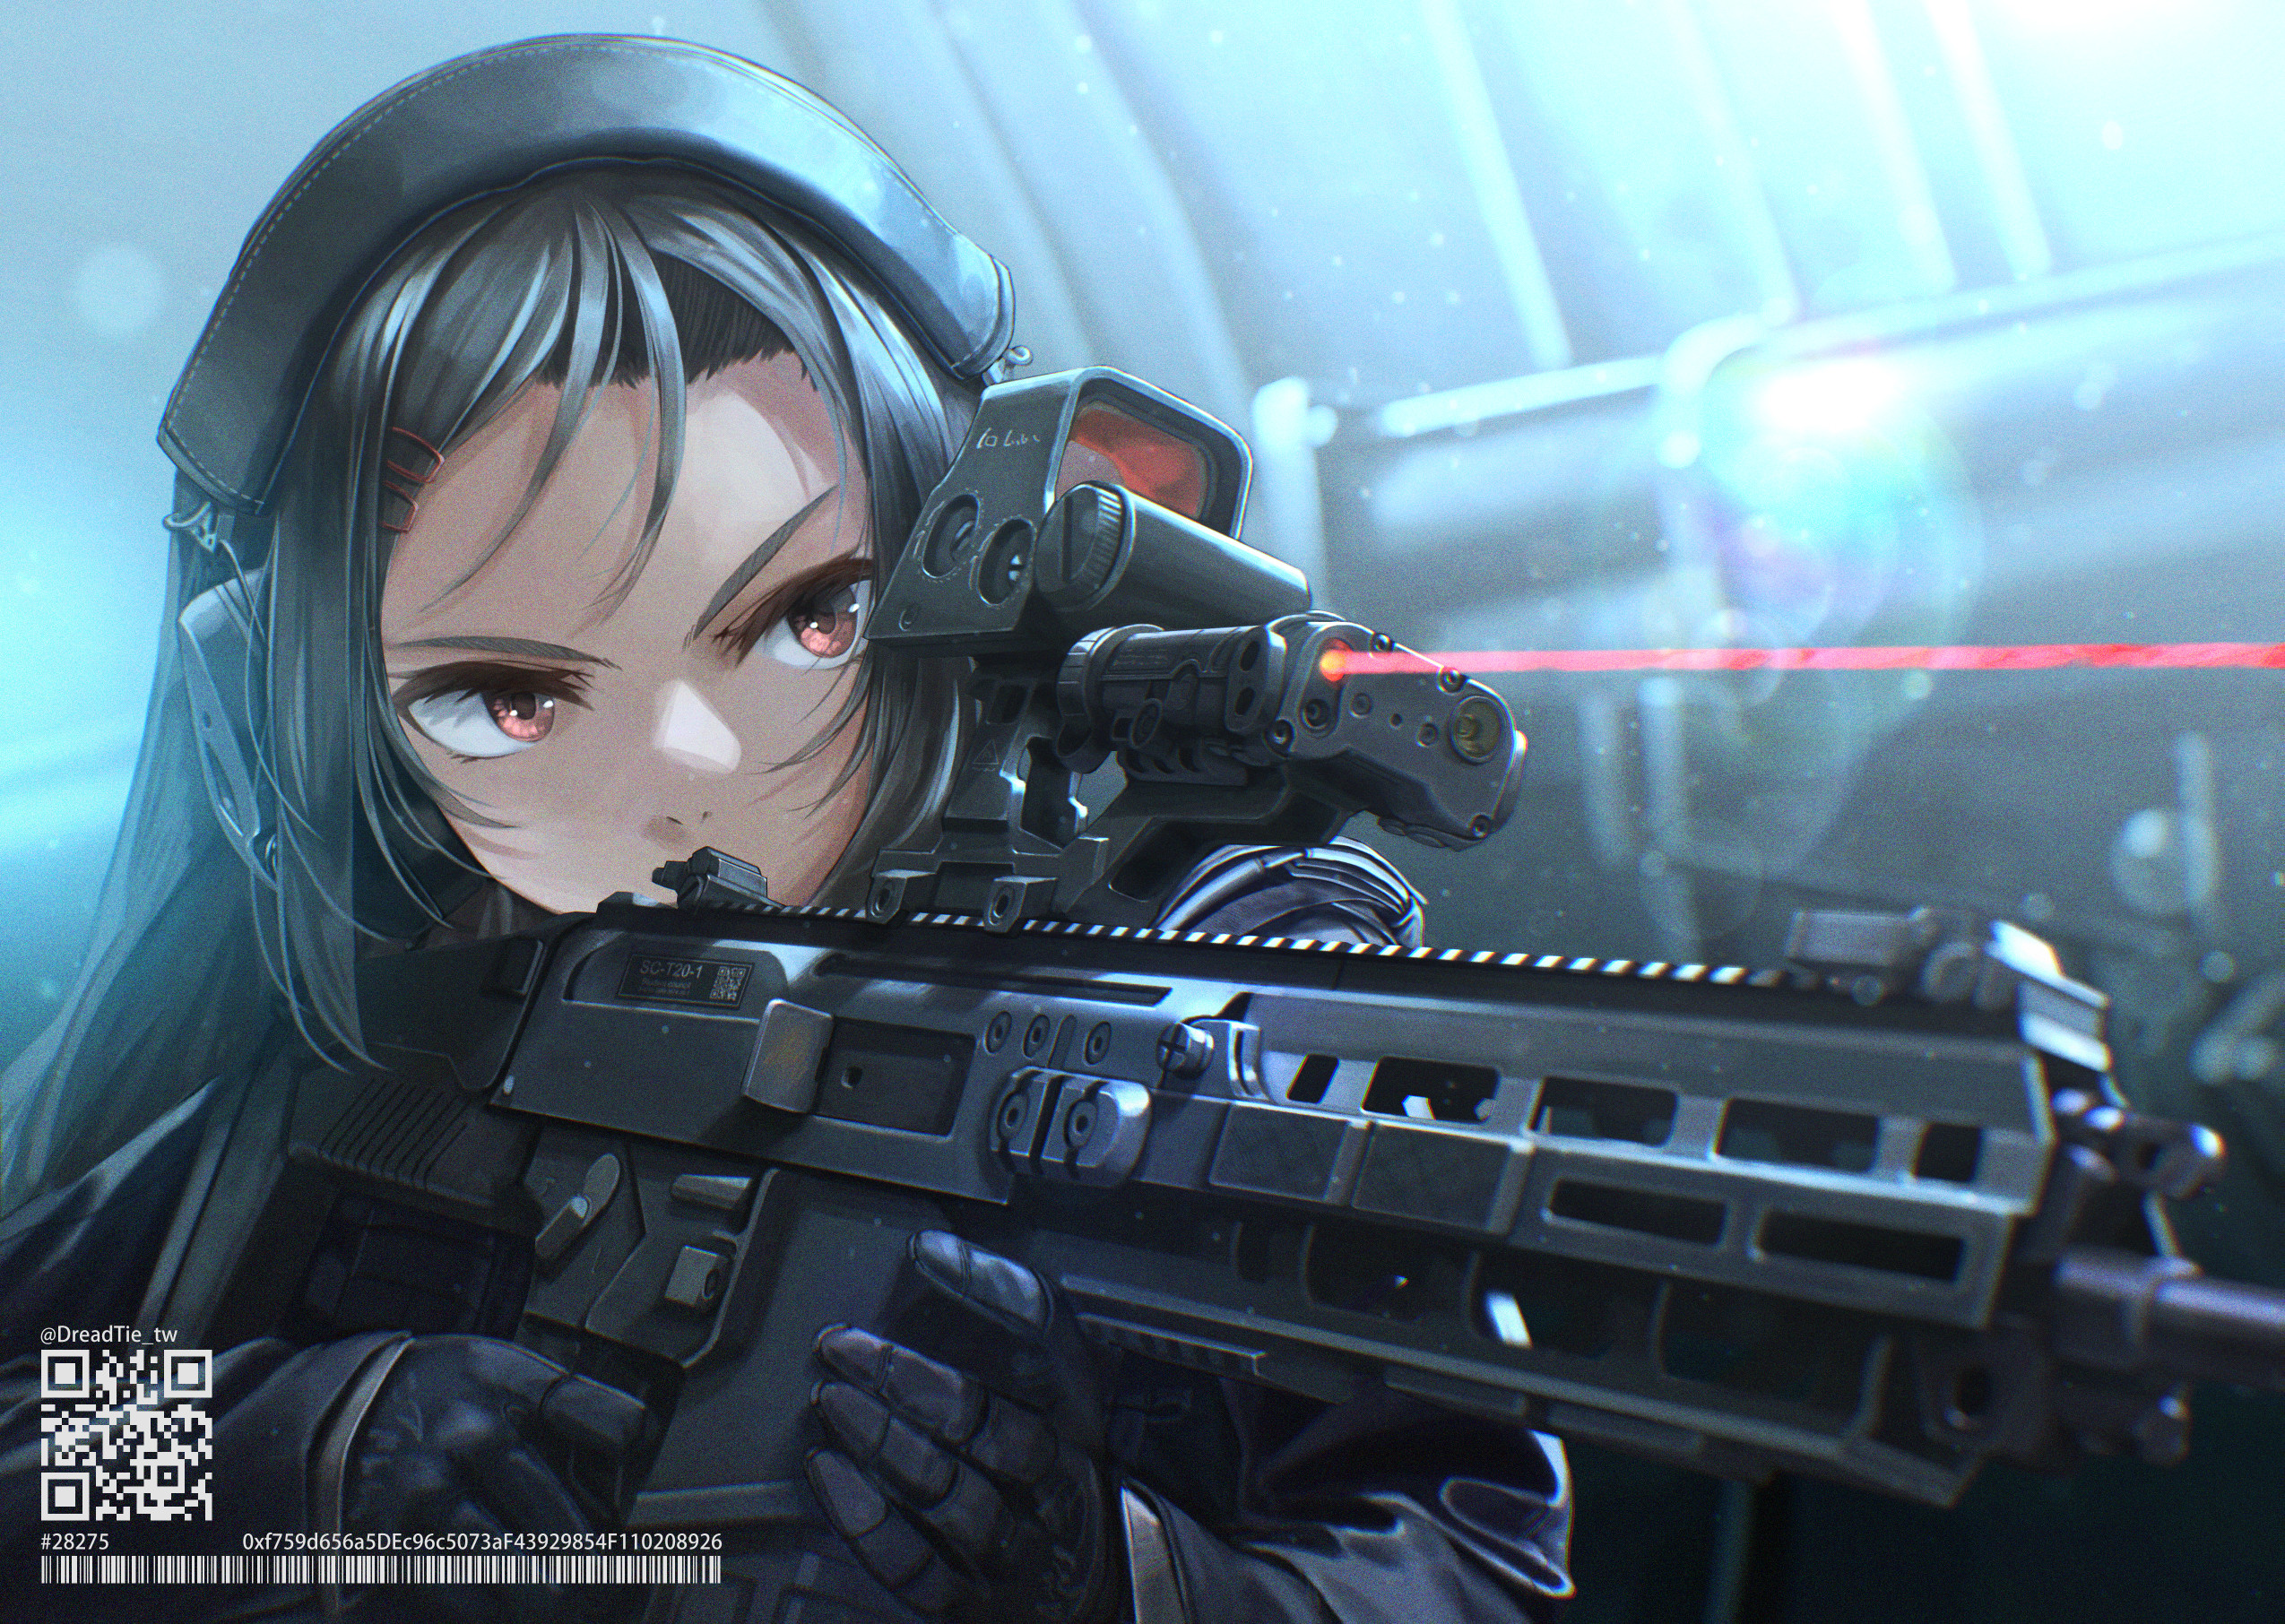 Anime Anime Girls Digital Art Artwork Illustration Weapon Women With Weapons Headsets DreadTie Dark  2549x1812